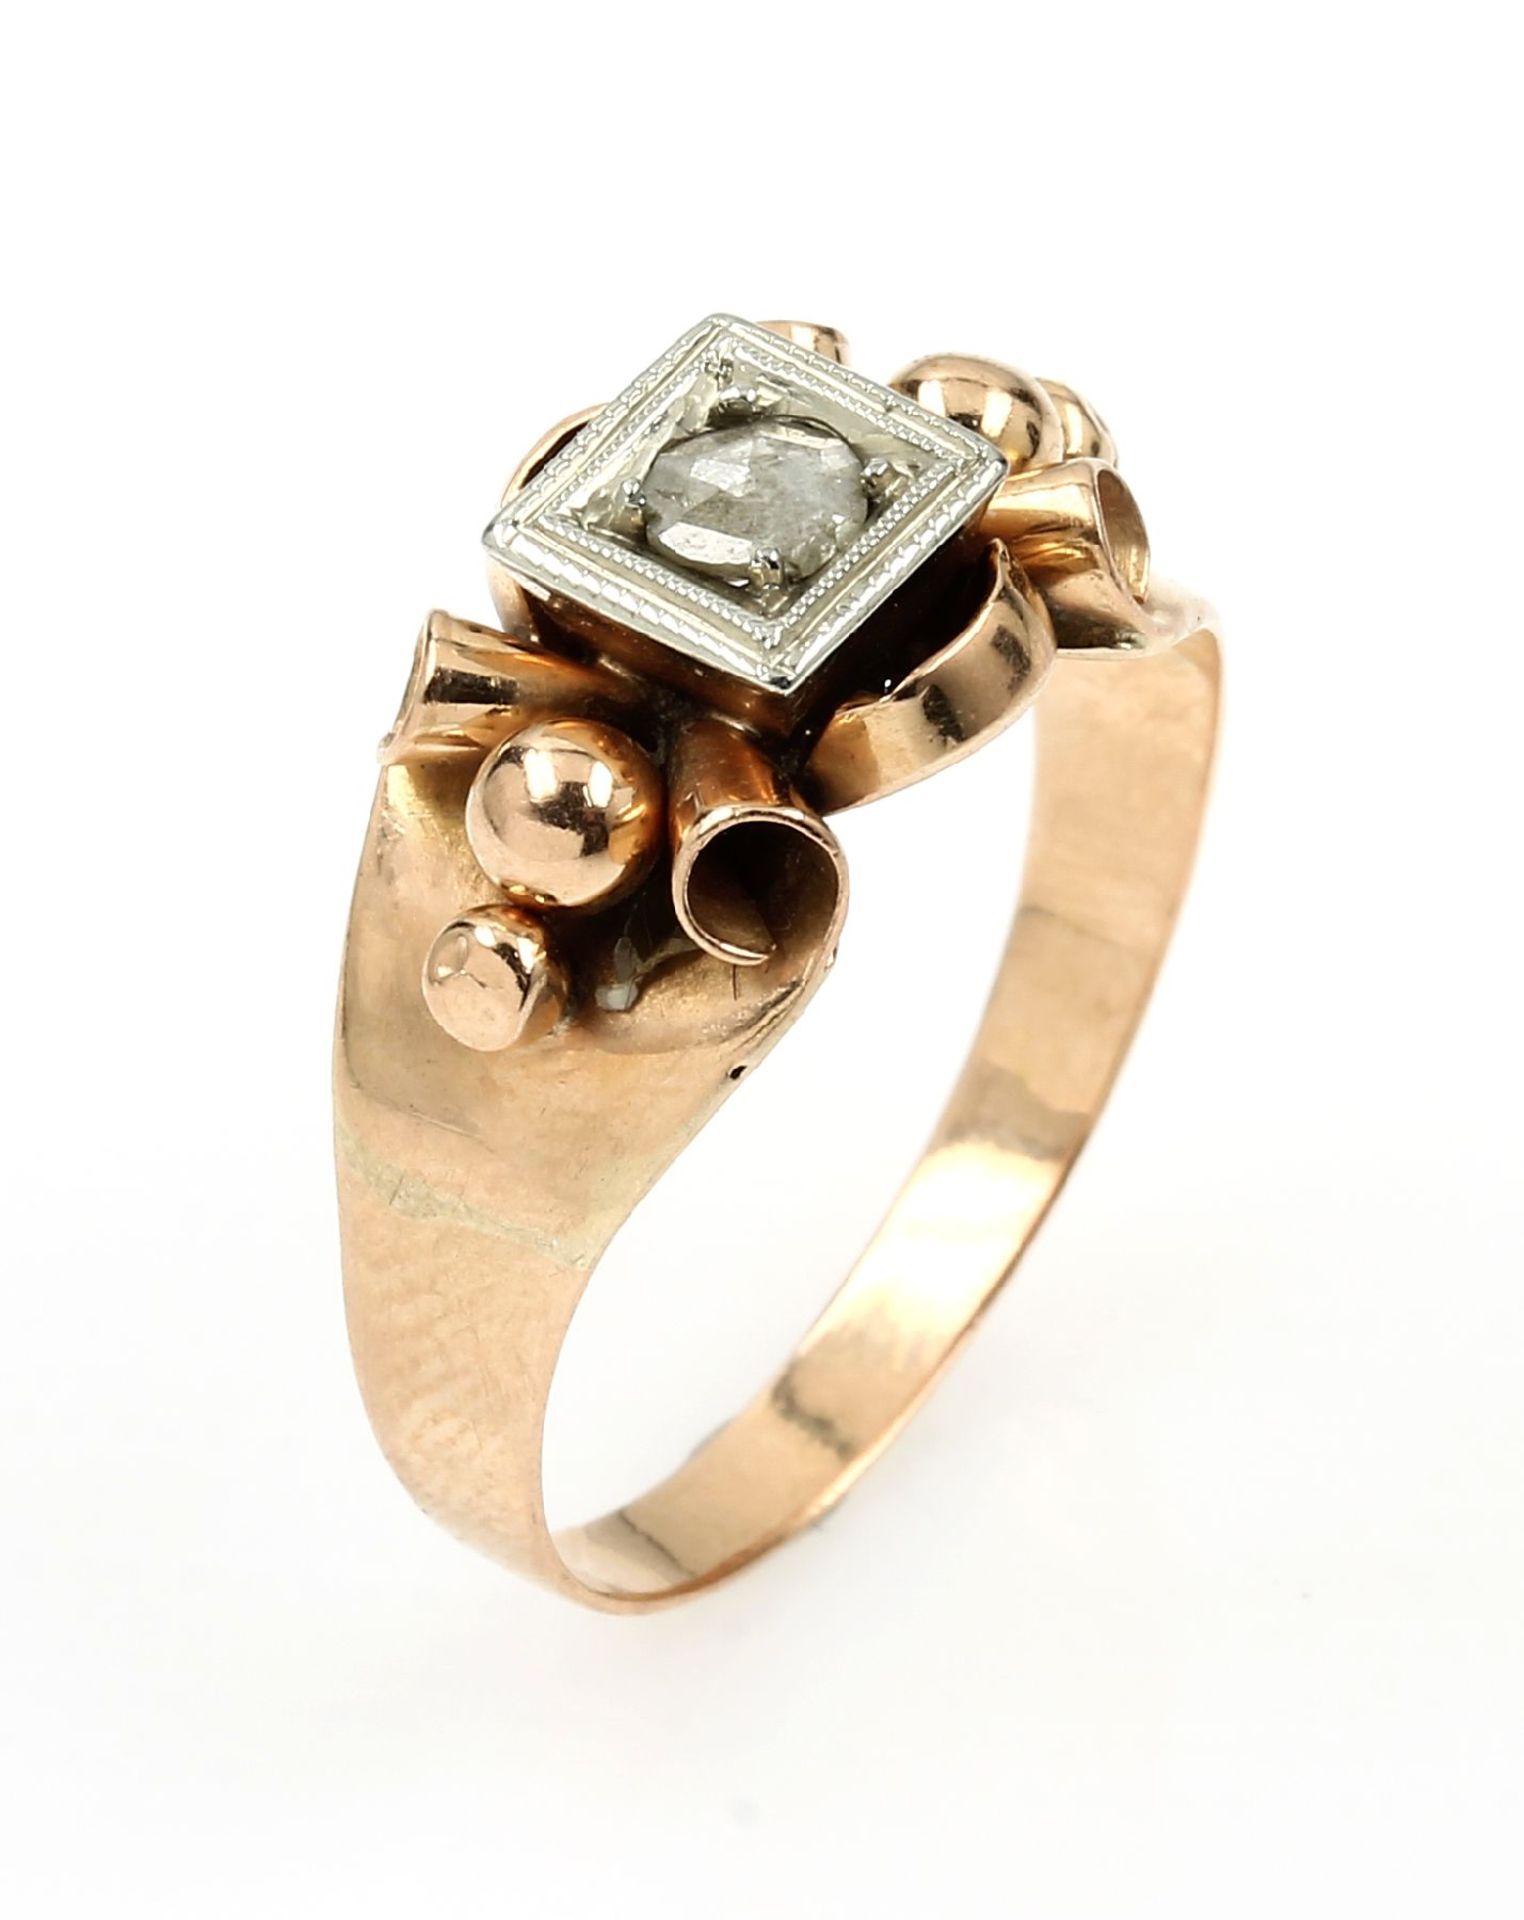 18 kt Gold Ring mit Diamantrose, um 1880, GG 750/000, 1